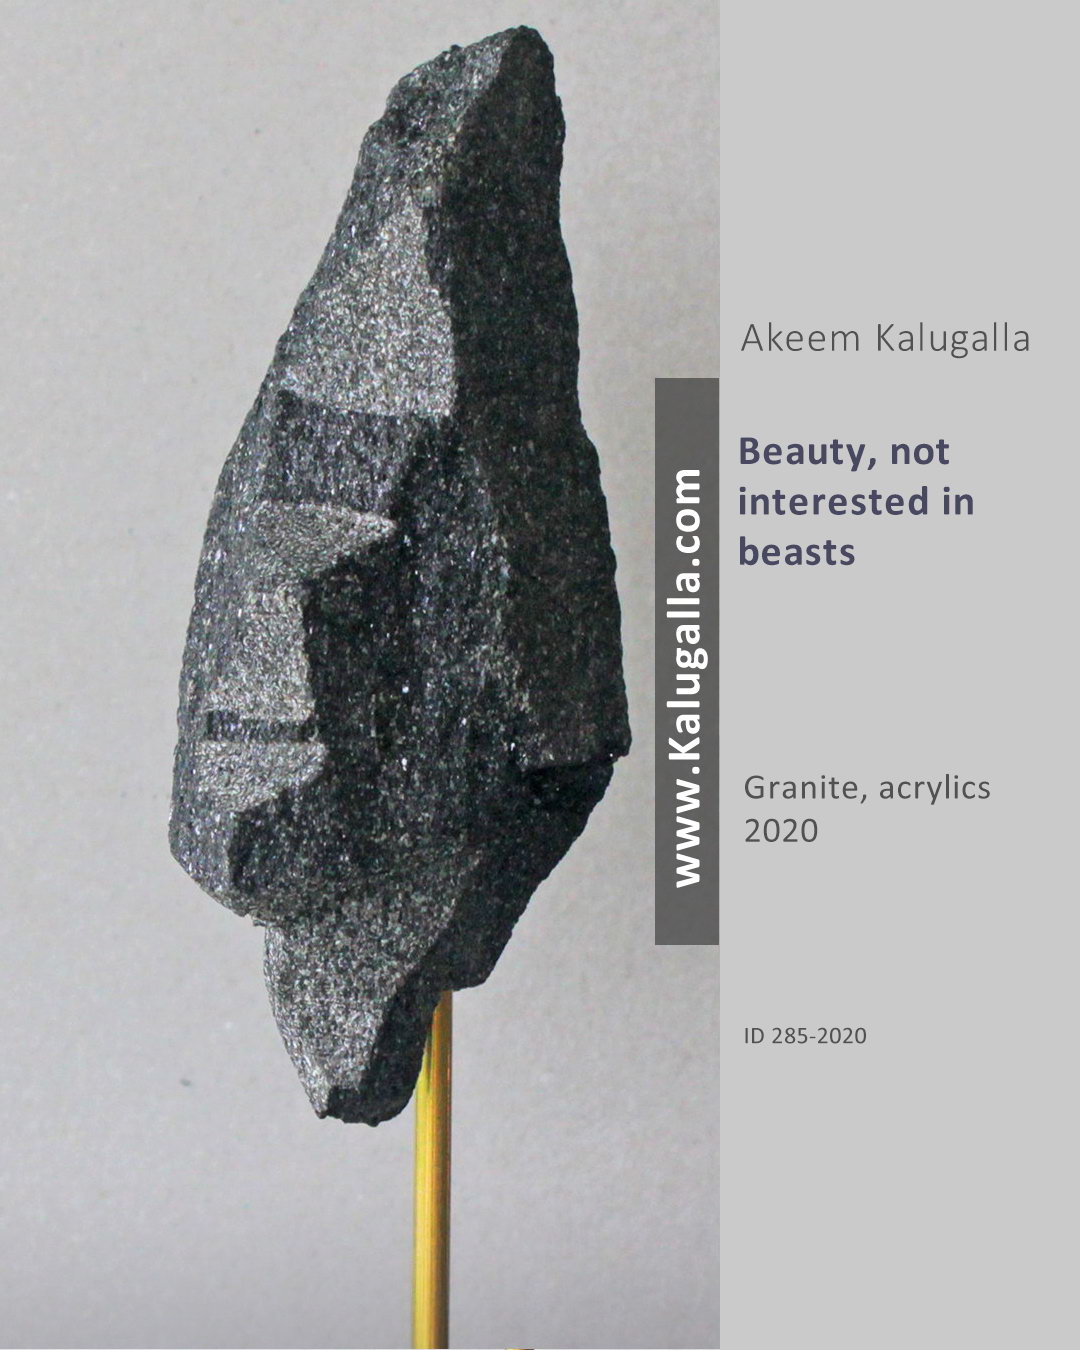 Akeem Kalugalla Contemporary Artist Sri Lanka